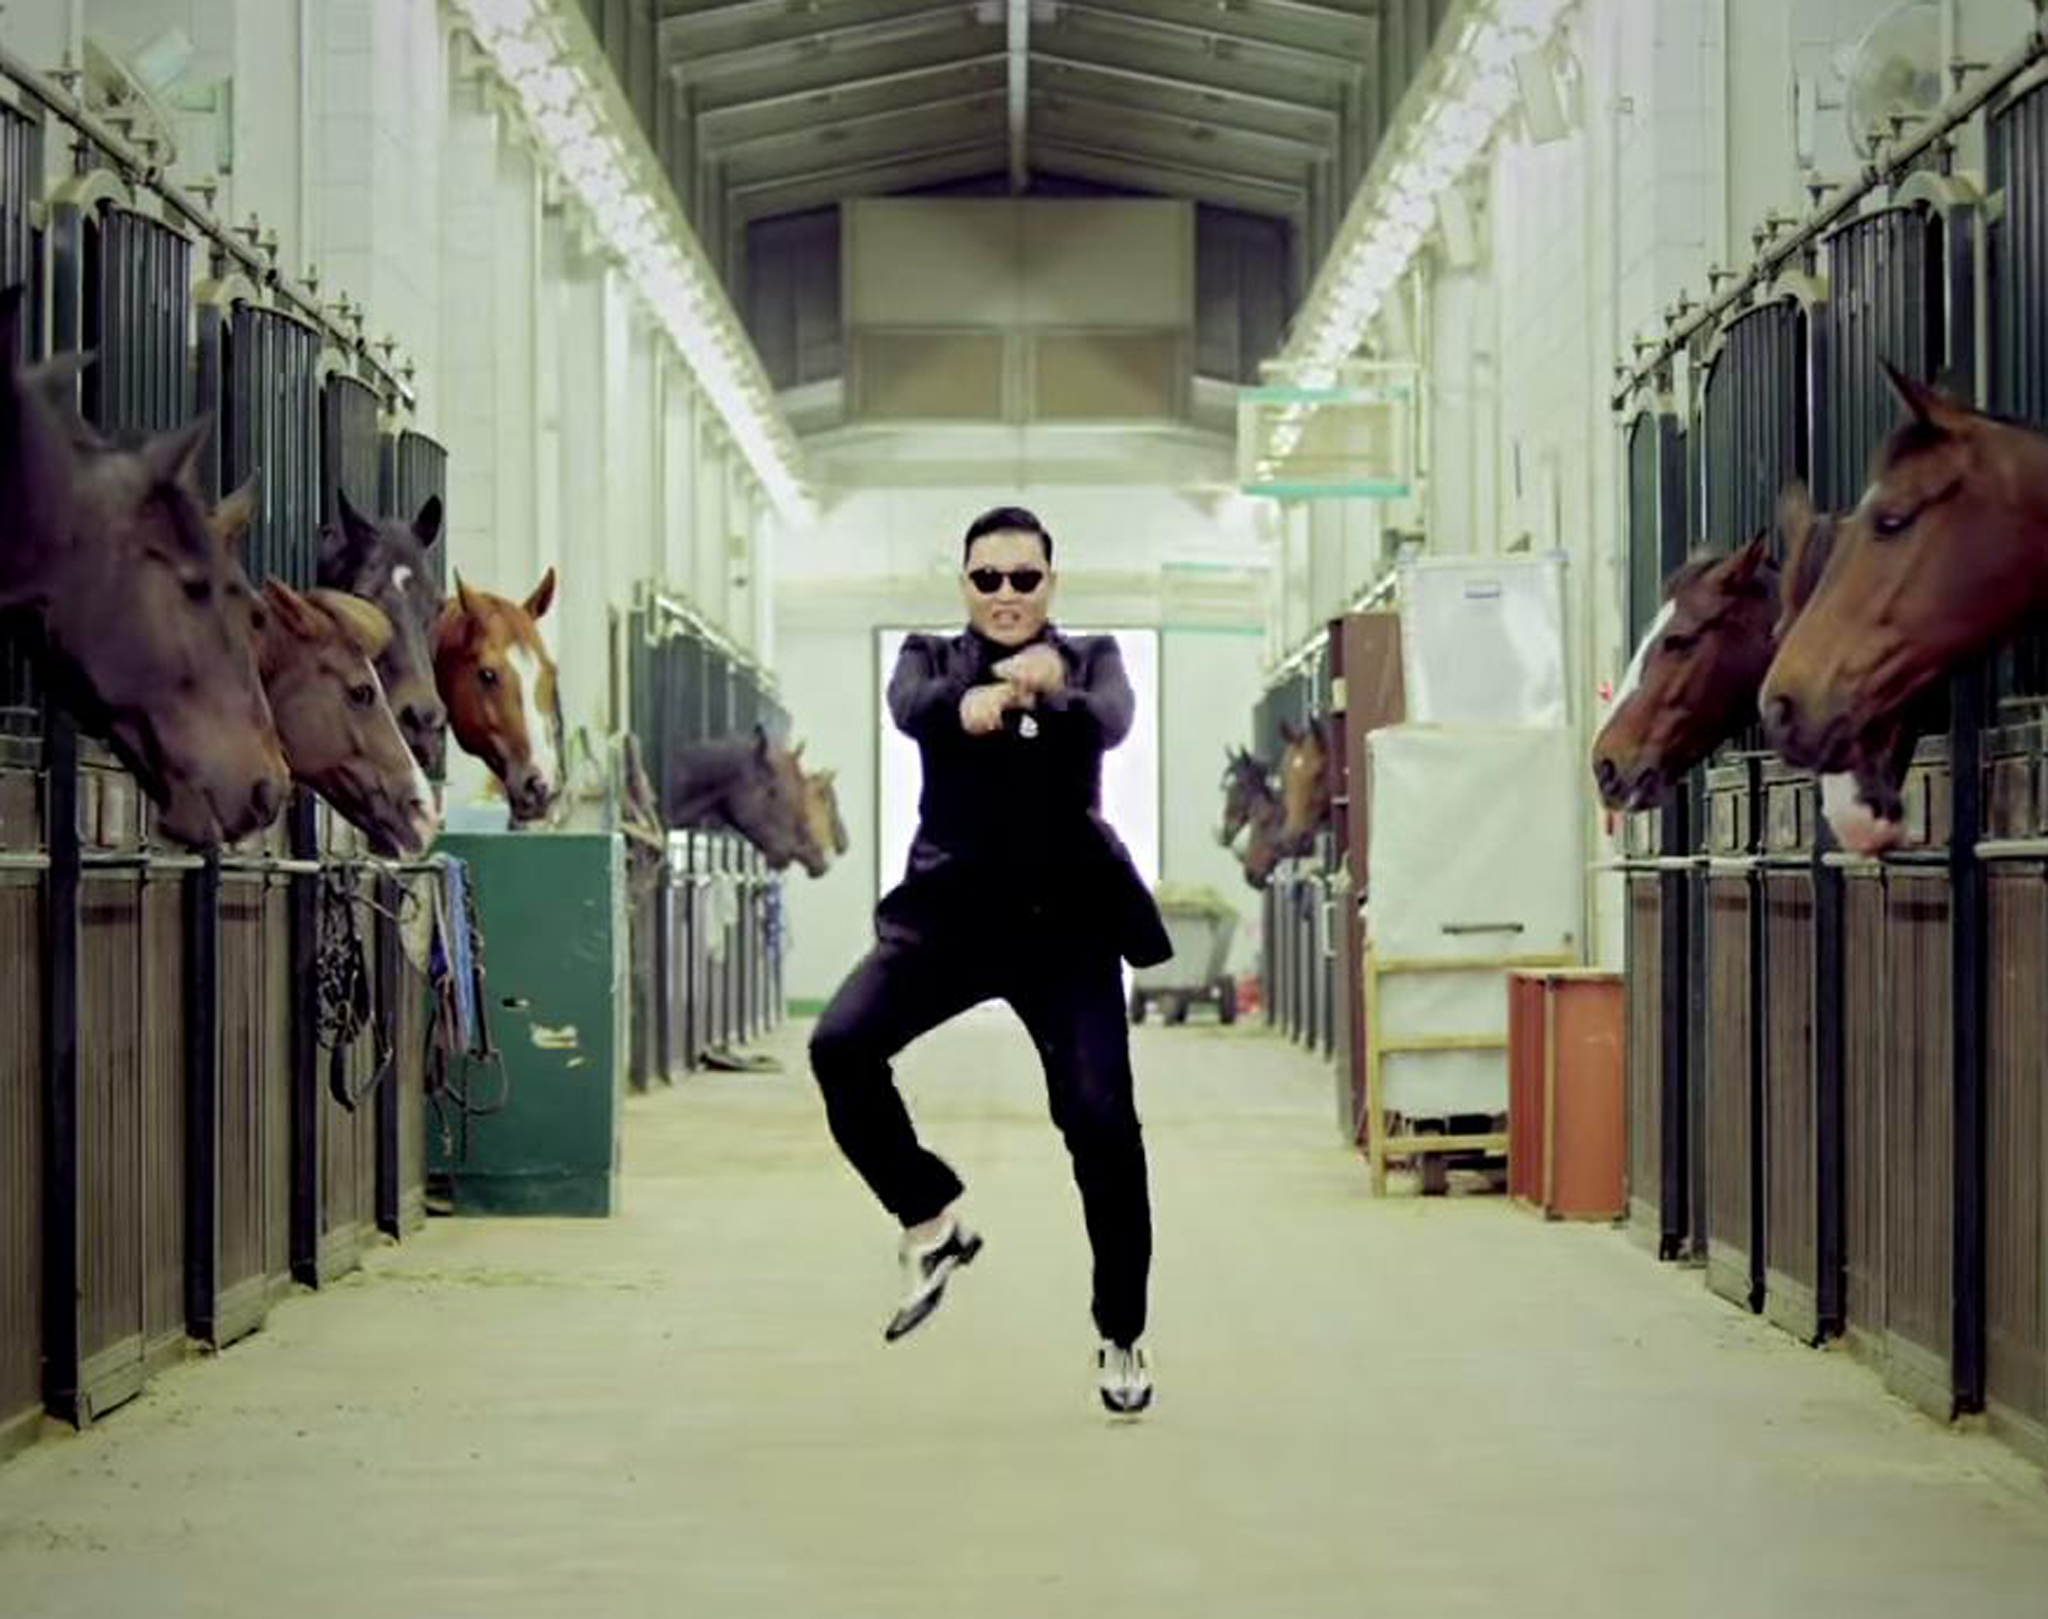 Psy-Gangnam-Style